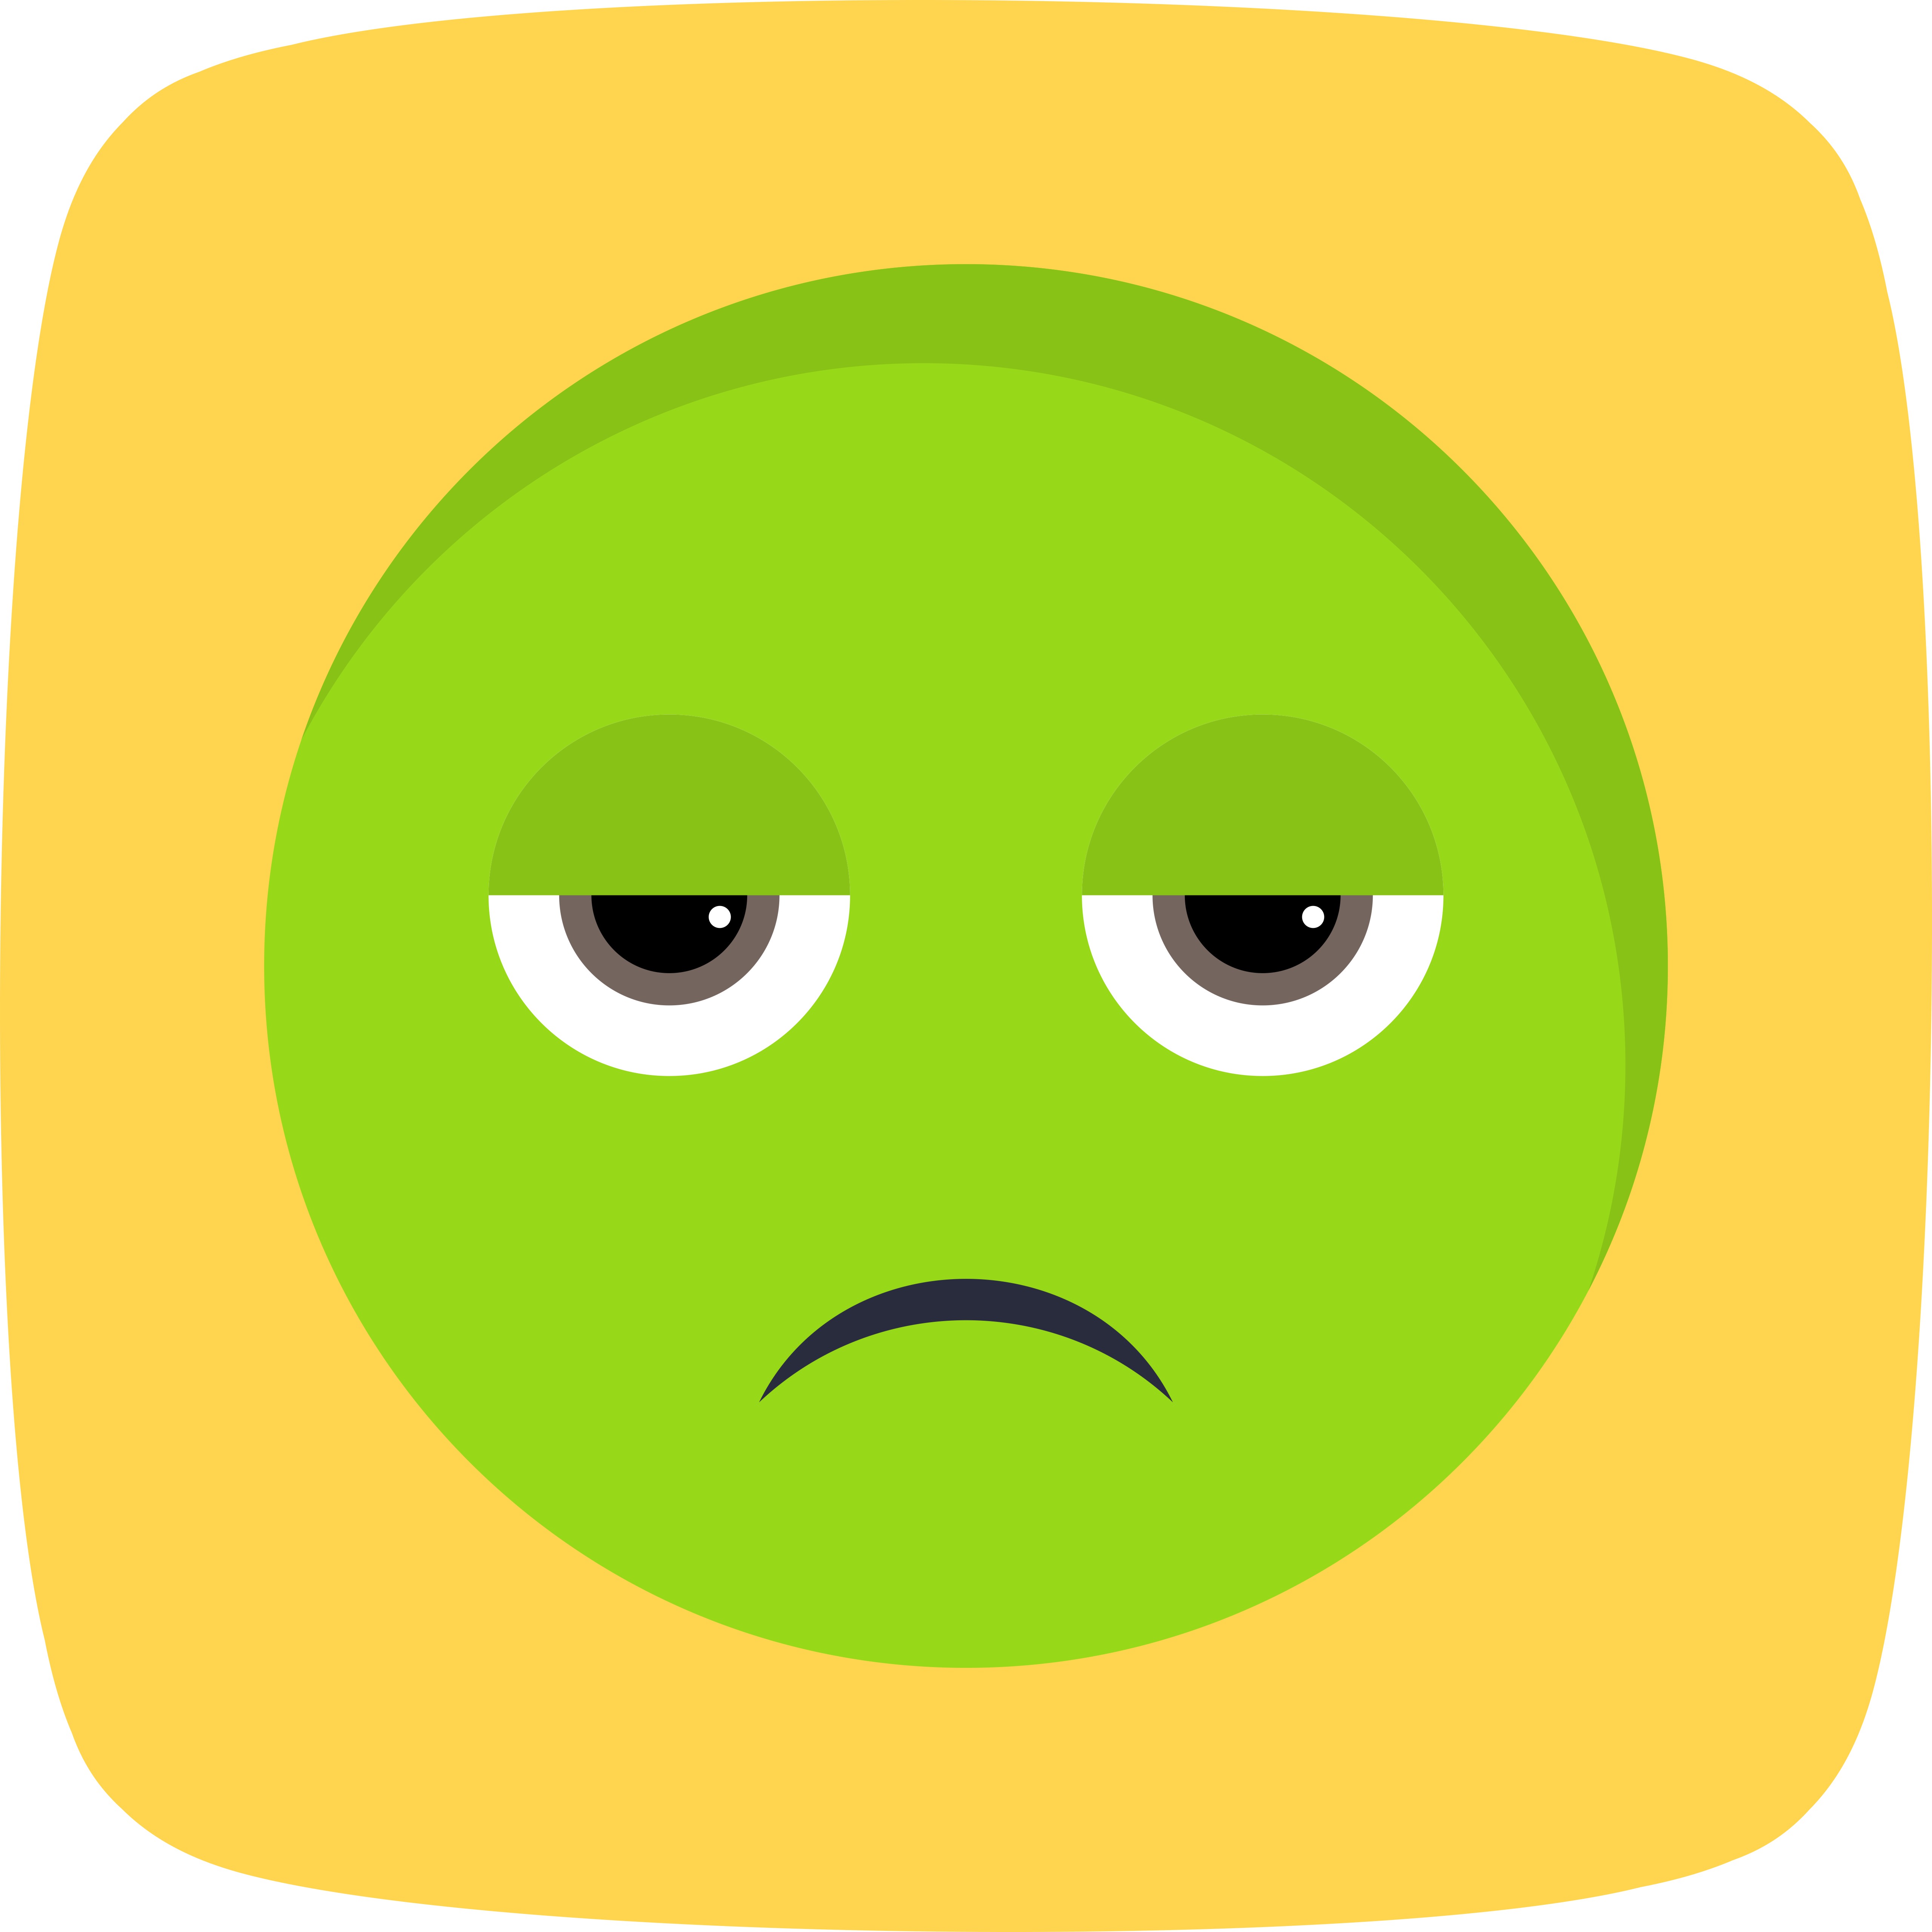 Sick Emoji Vector Icon 367369 - Download Free Vectors, Clipart Graphics